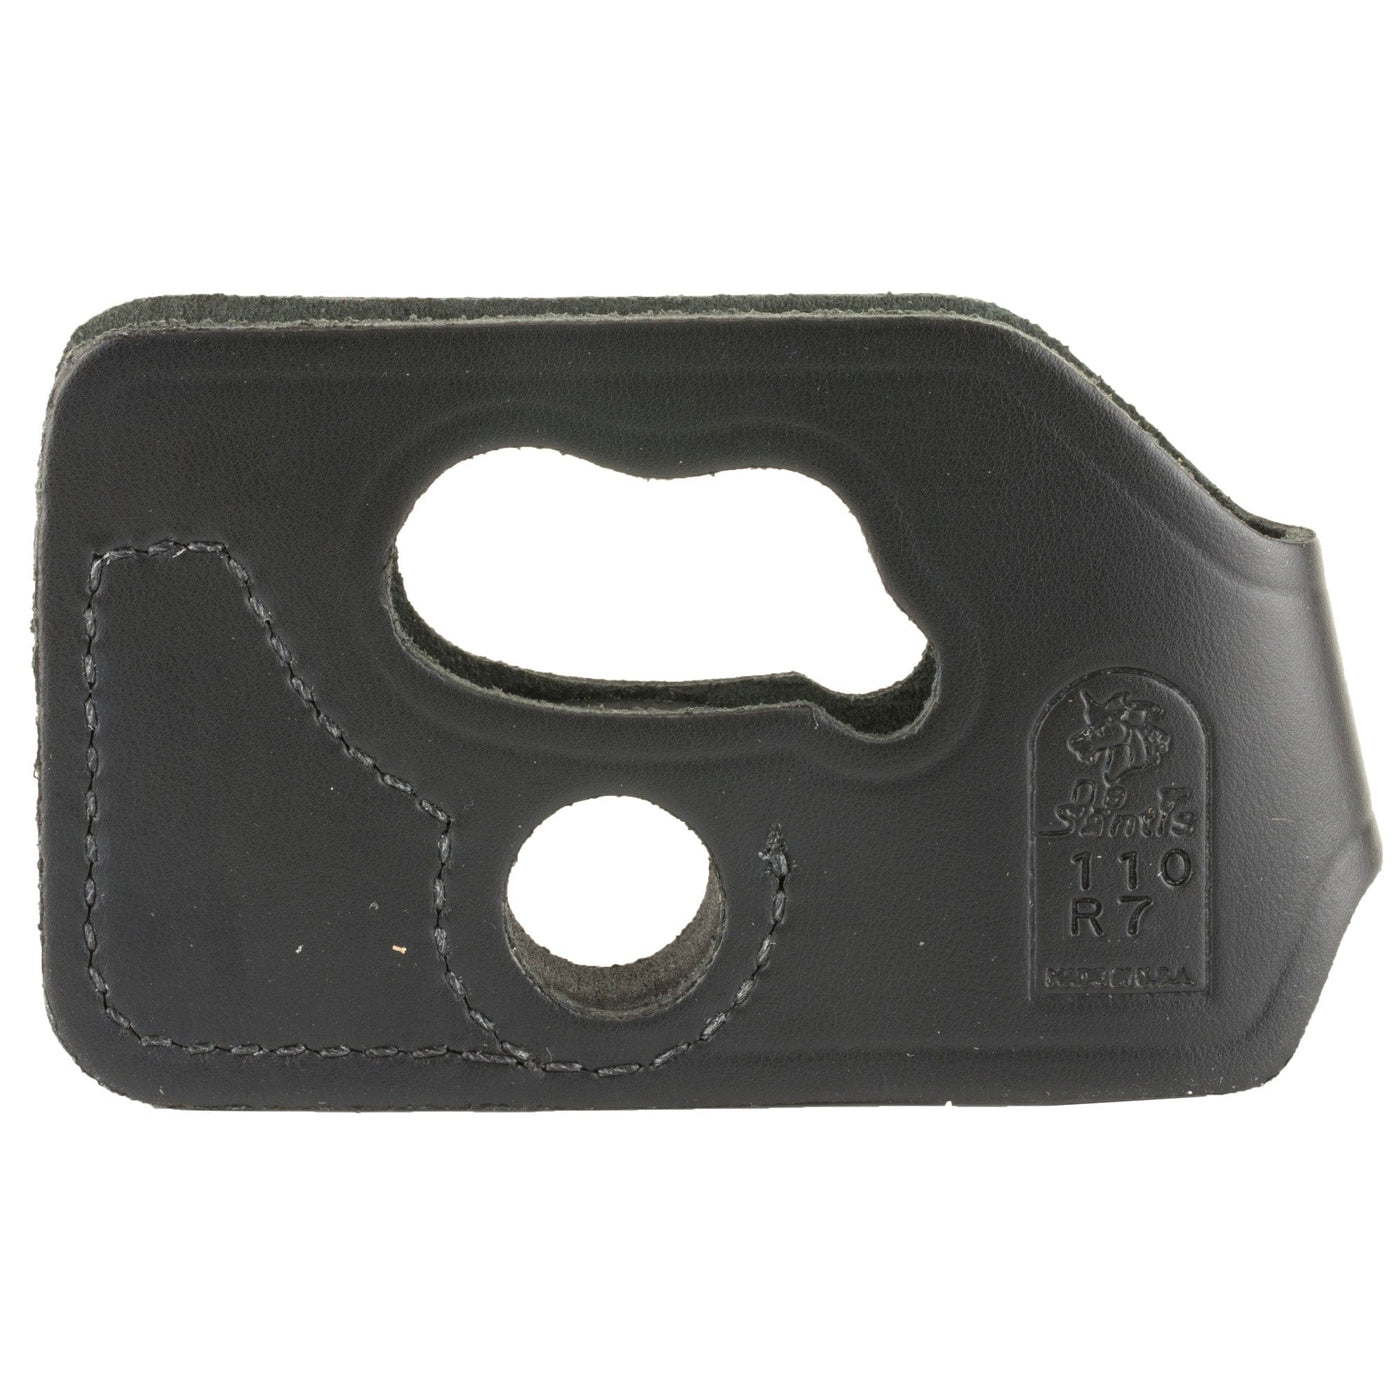 Desantis Gunhide Desantis Pocket Shot Holster - Ambi Leather Ruger Lcp Black Firearm Accessories